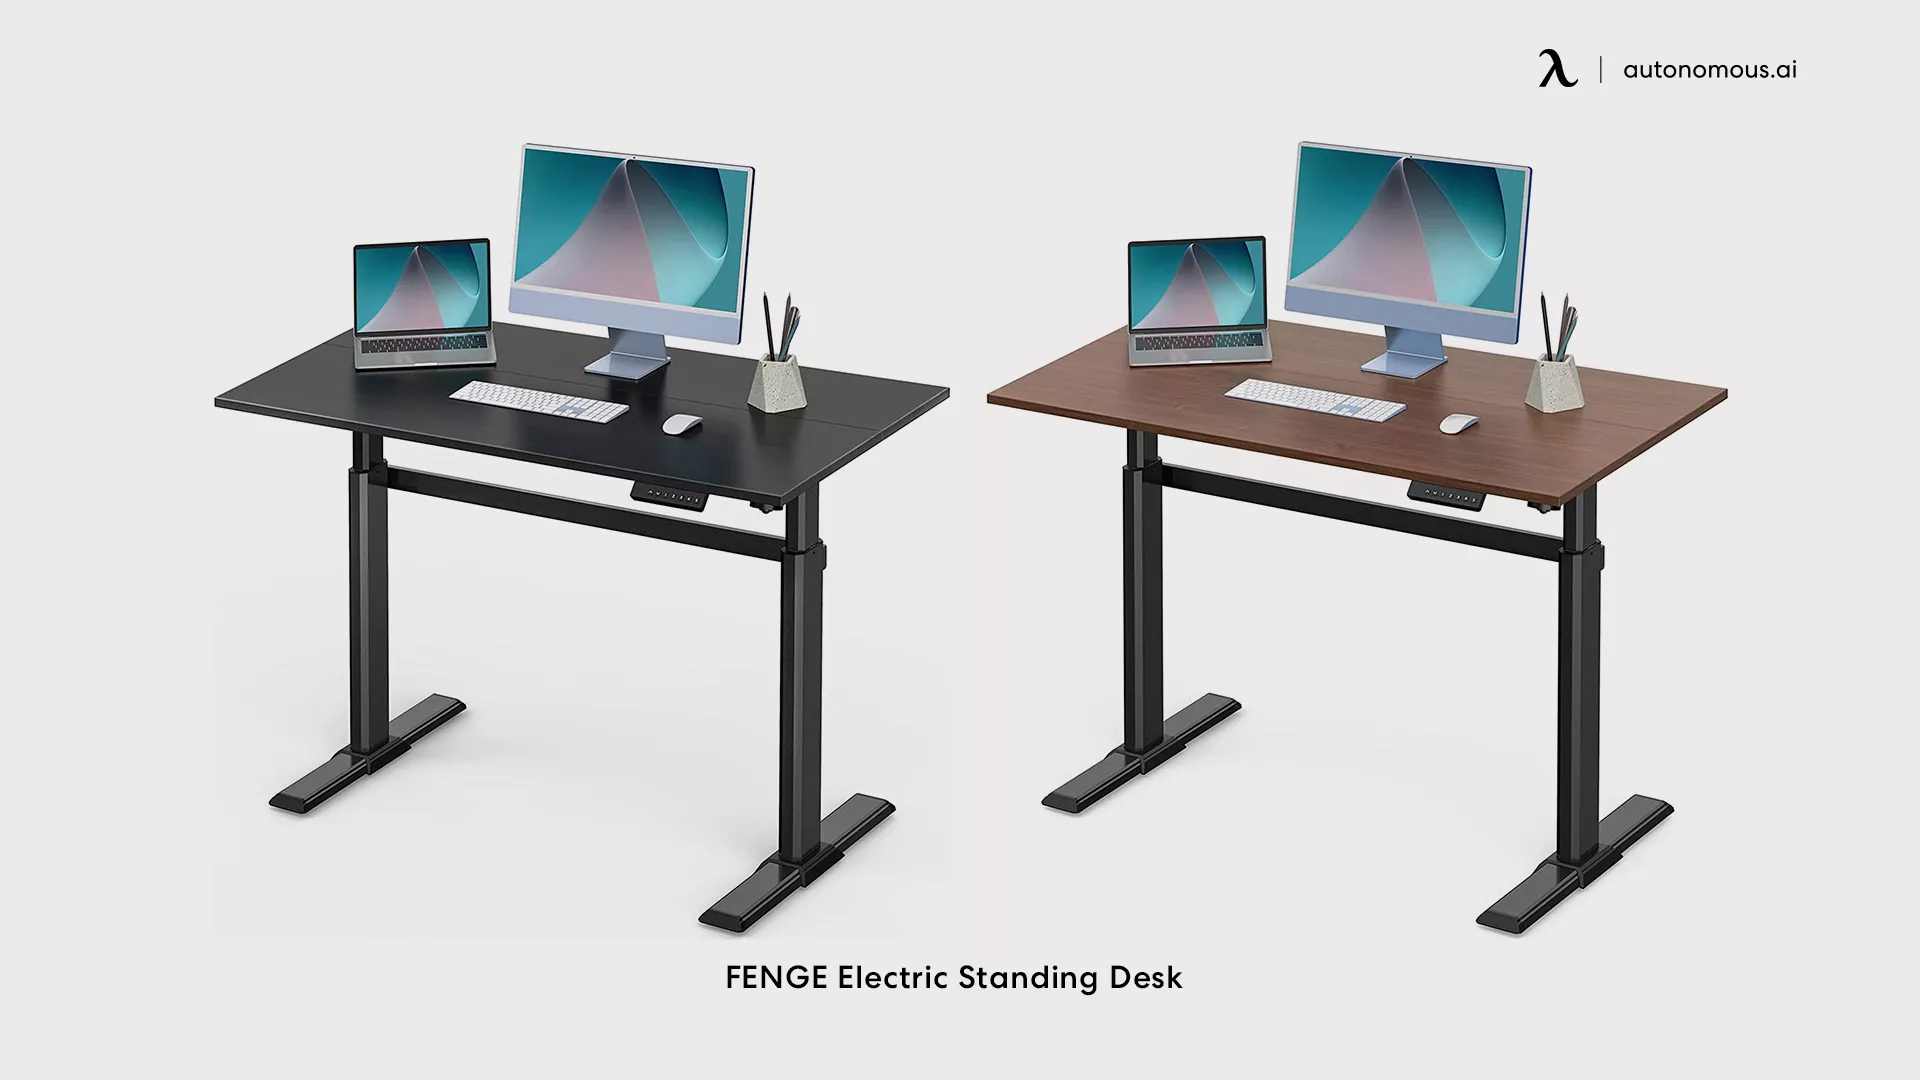 FENGE Electric Standing Desk